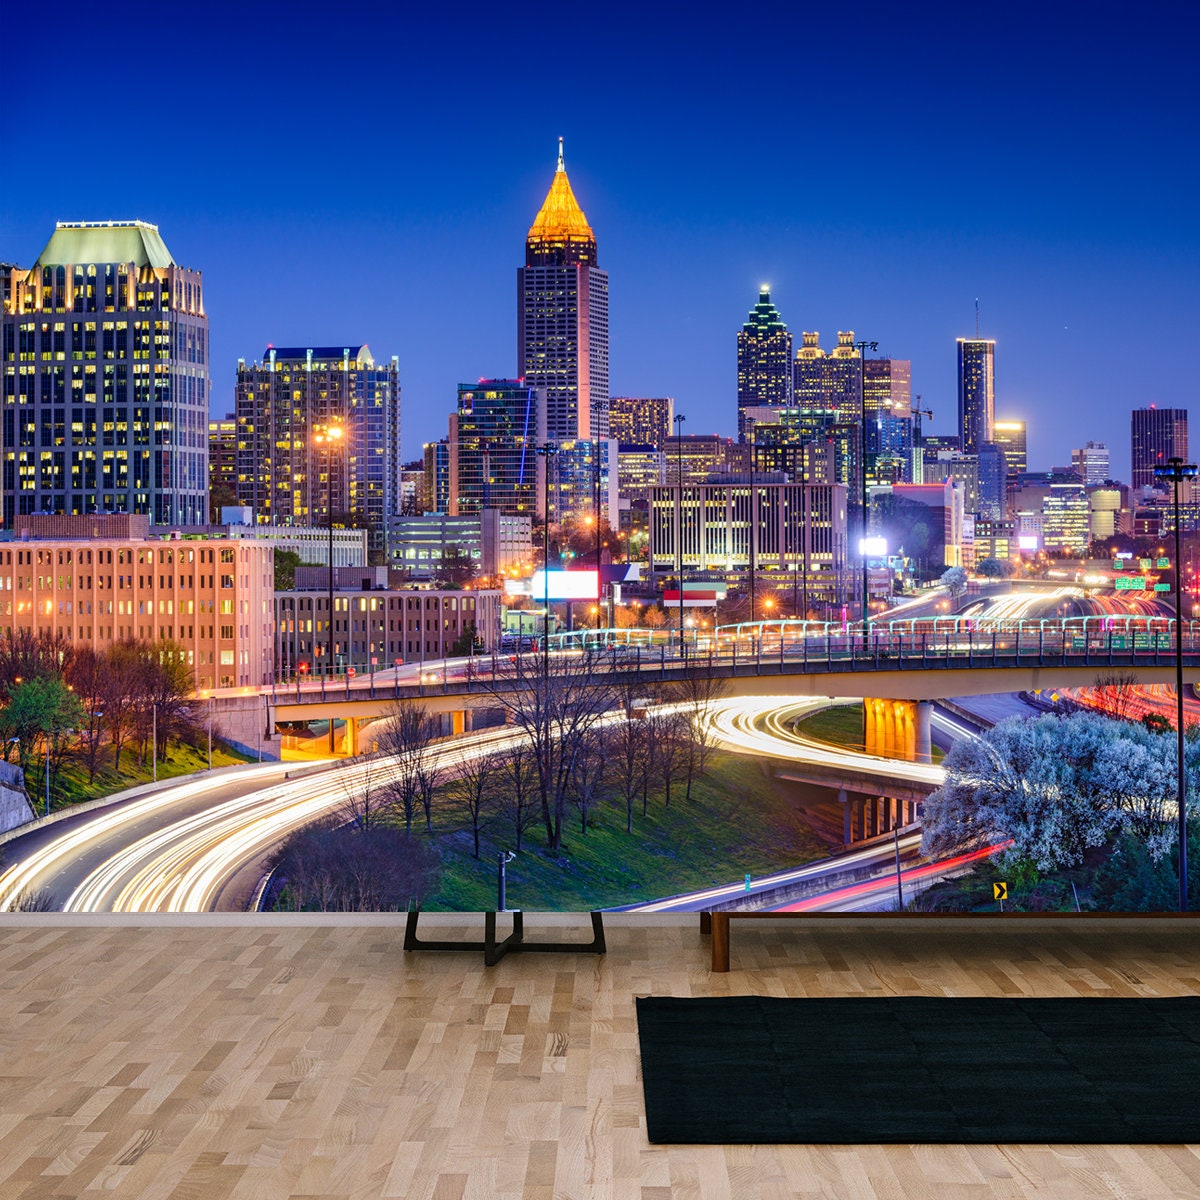 Atlanta, Georgia, USA Downtown Skyline Wallpaper Living Room Mural